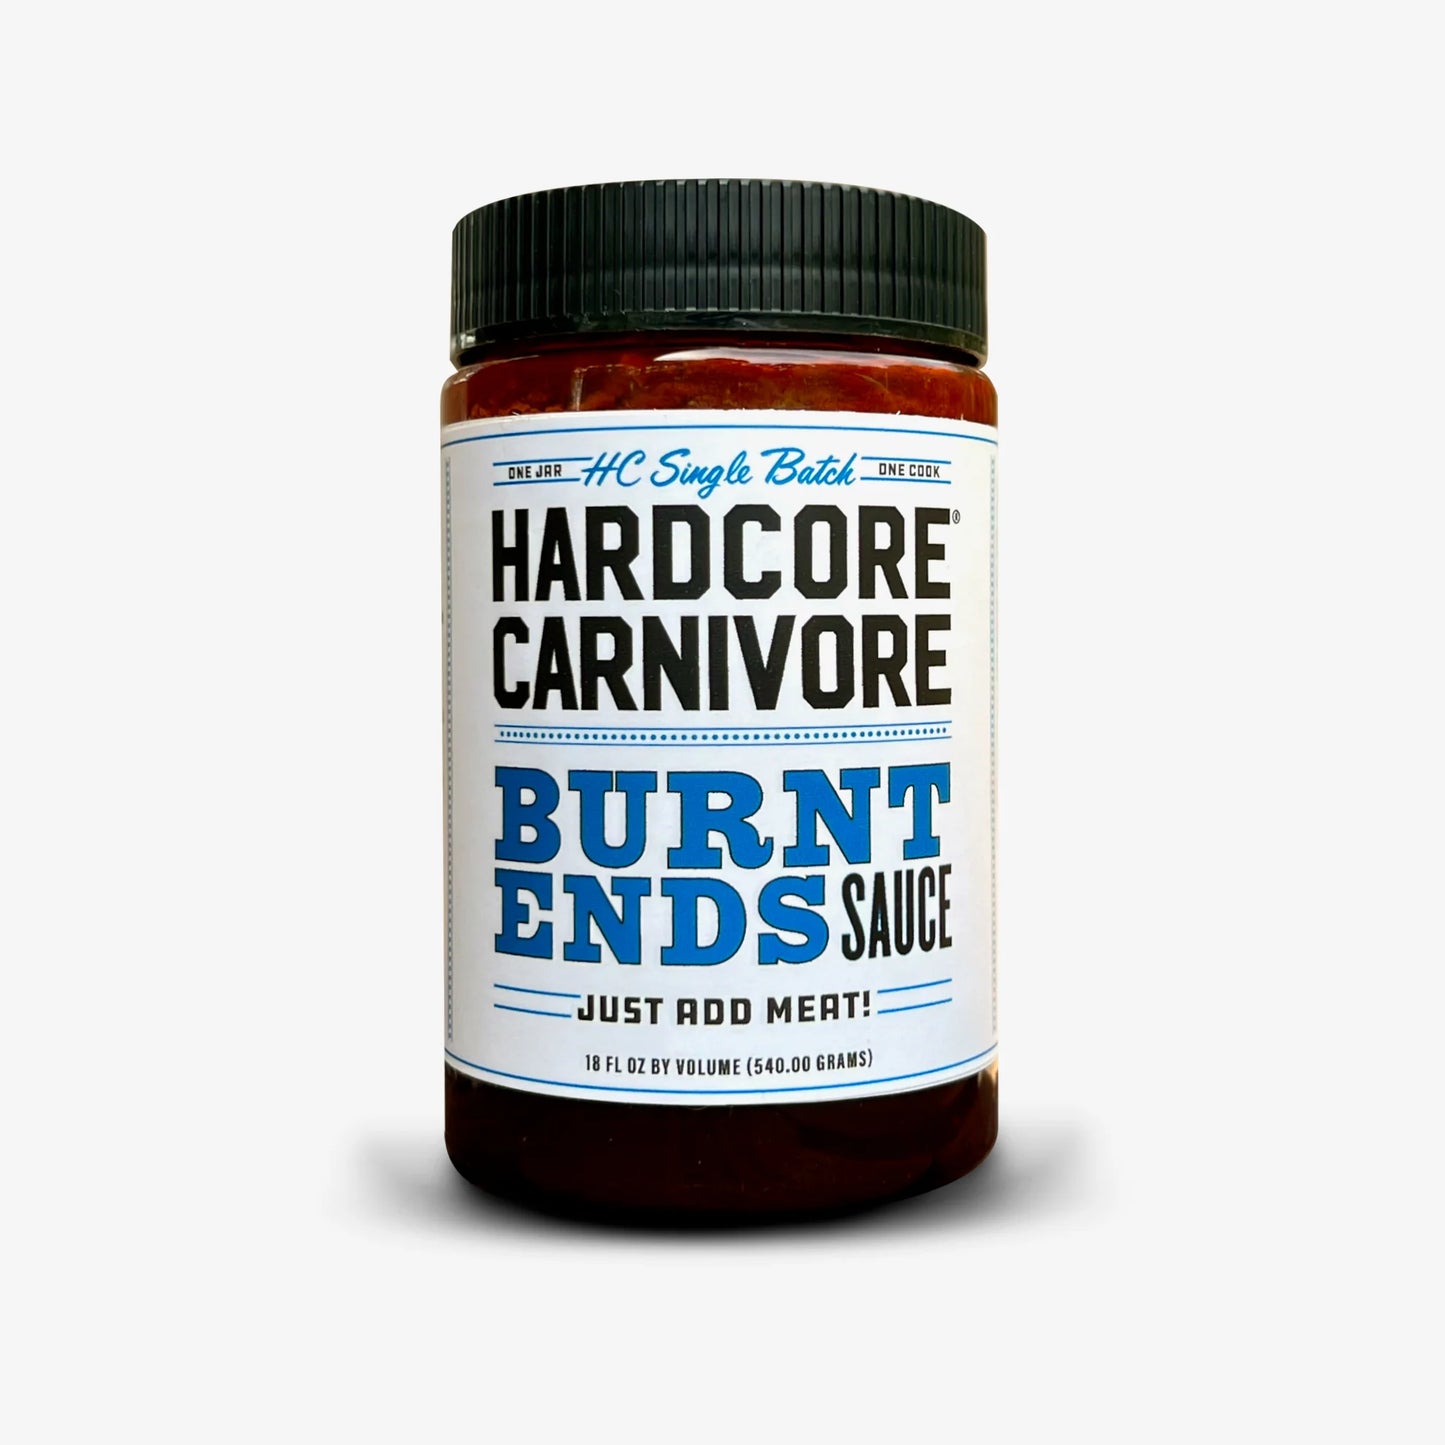 Hardcore Carnivore Burnt Ends Sauce - 18oz